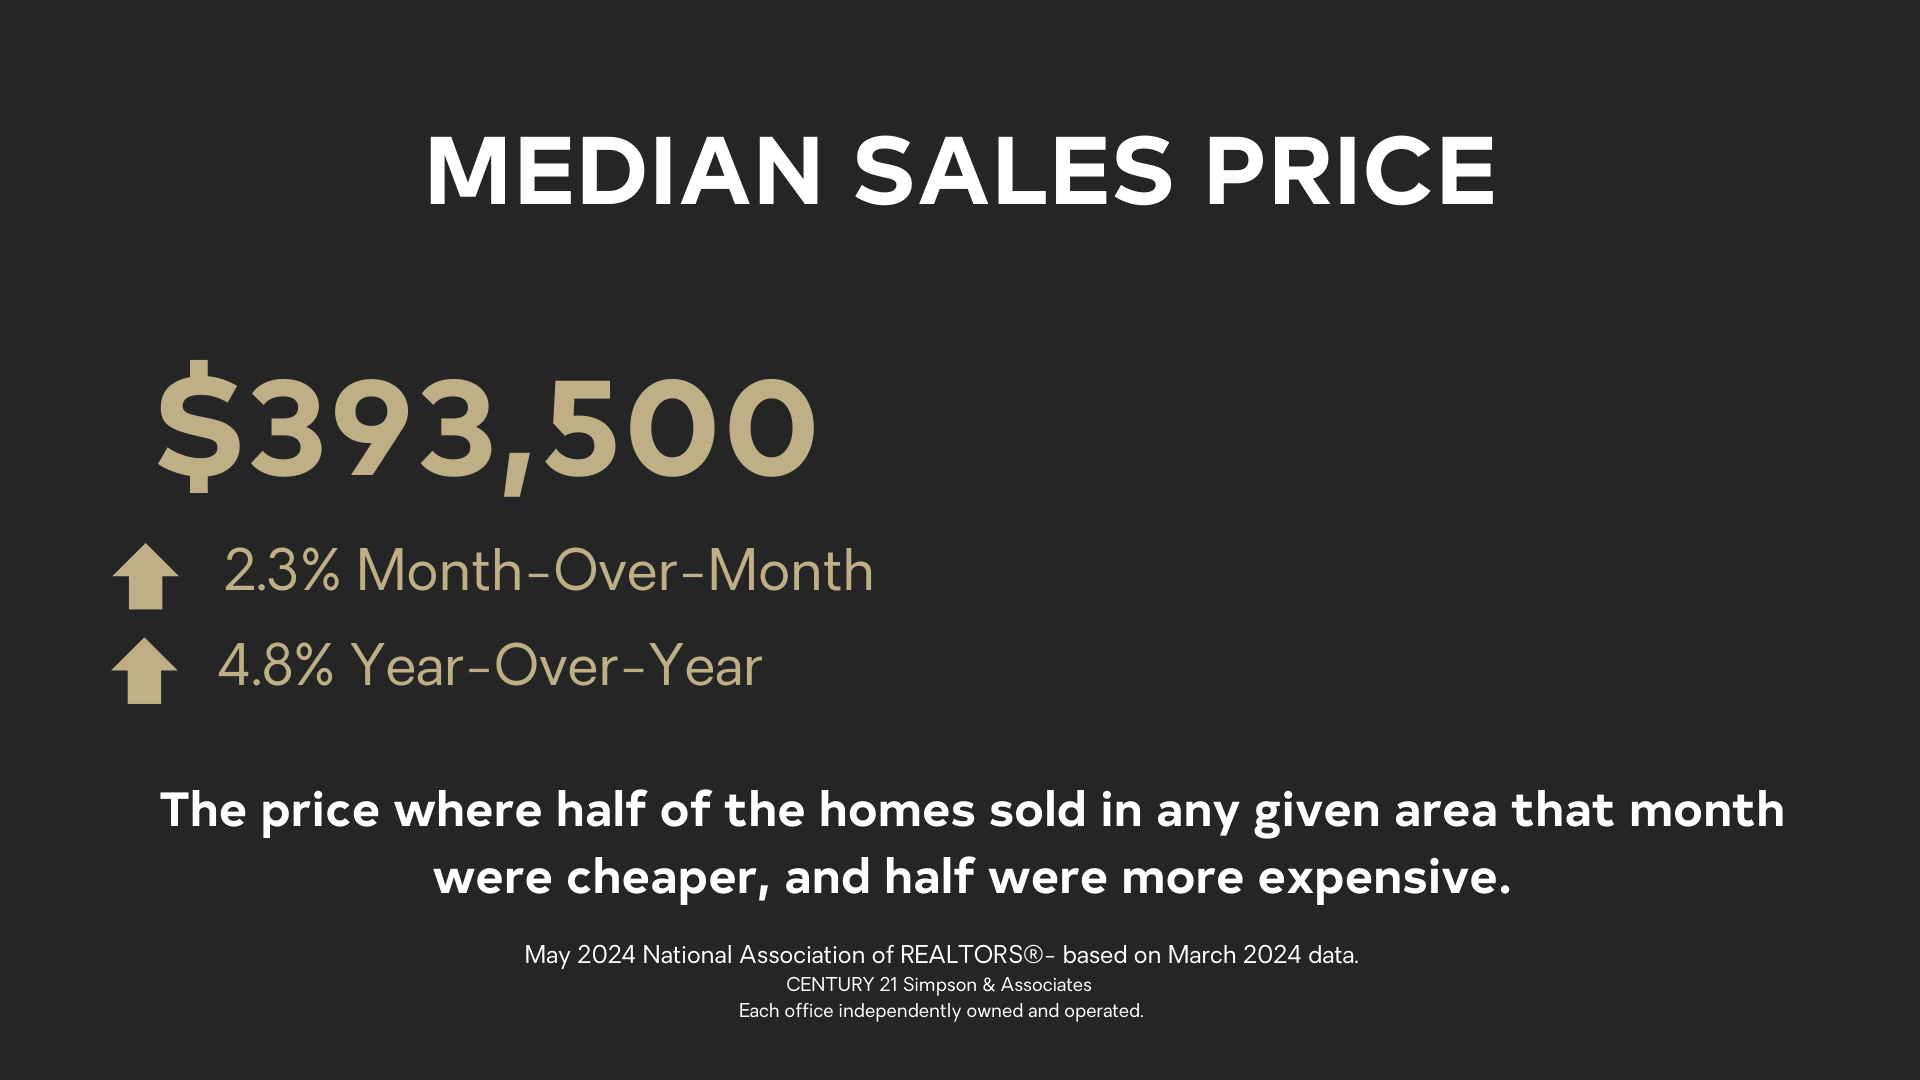 May '24 Median Sales Price